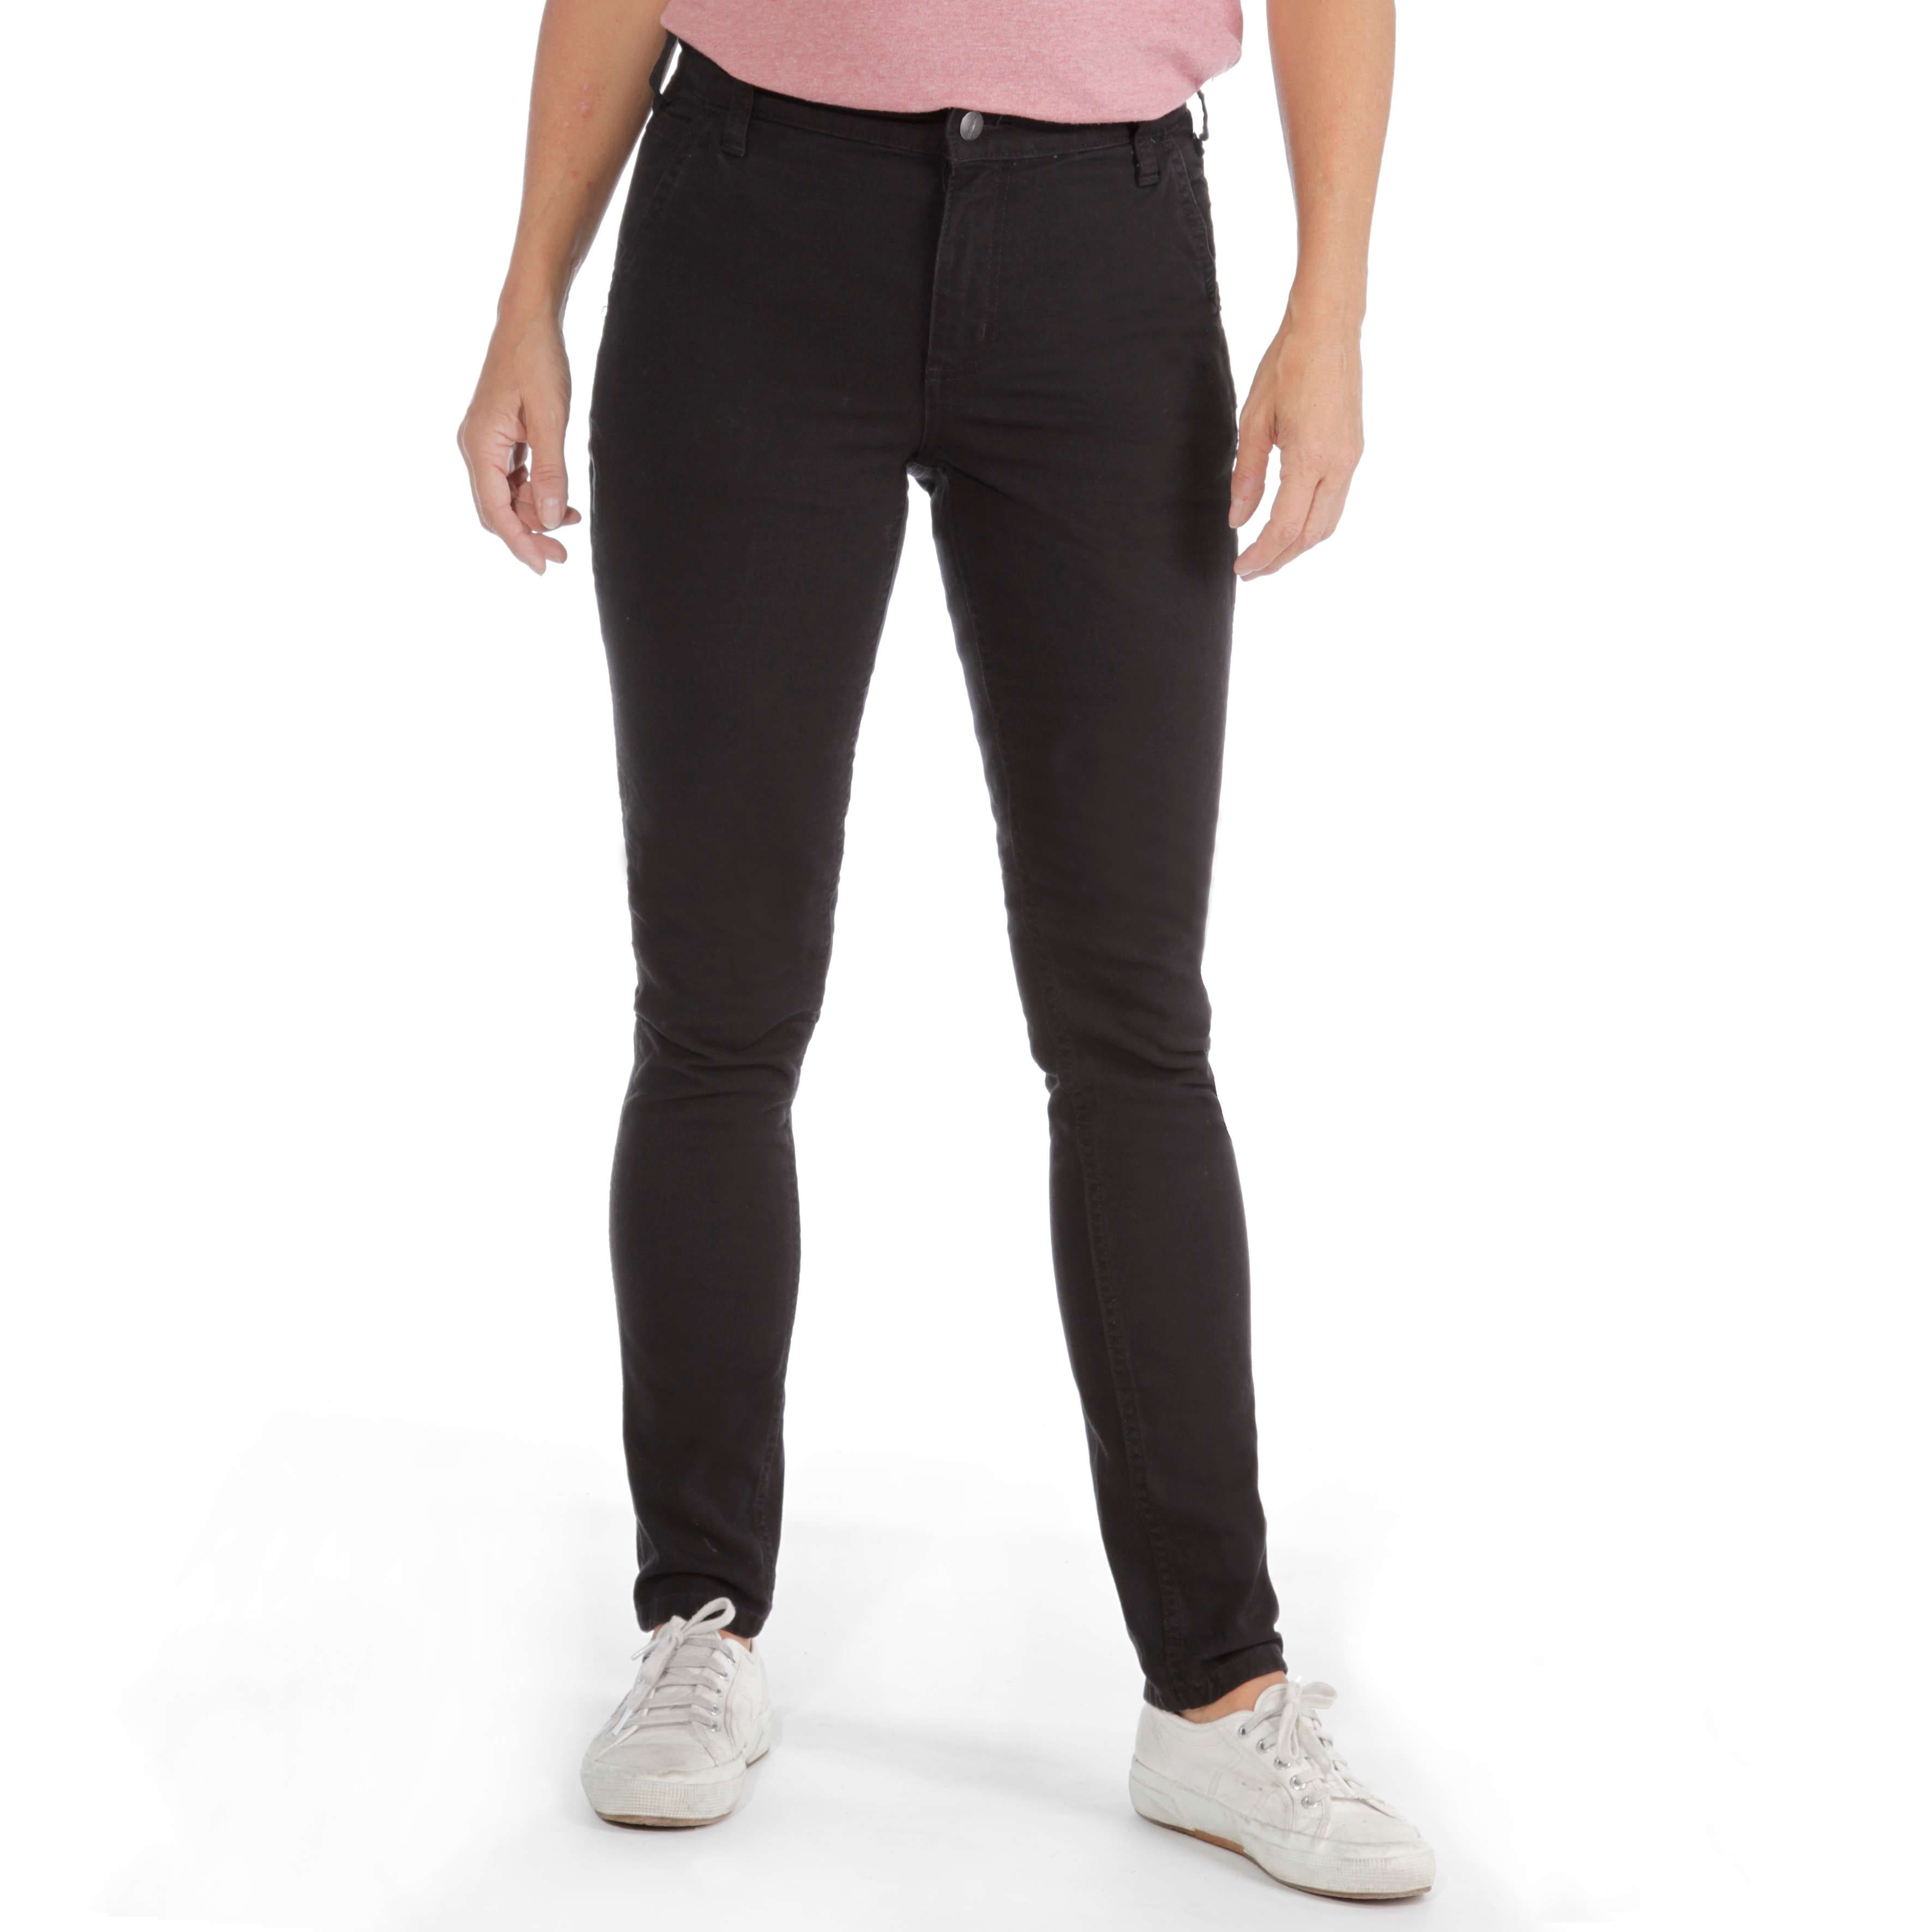 Carhartt Women's Original Fit Fleece Lined Crawford Pants Black 18 Regular  NEW